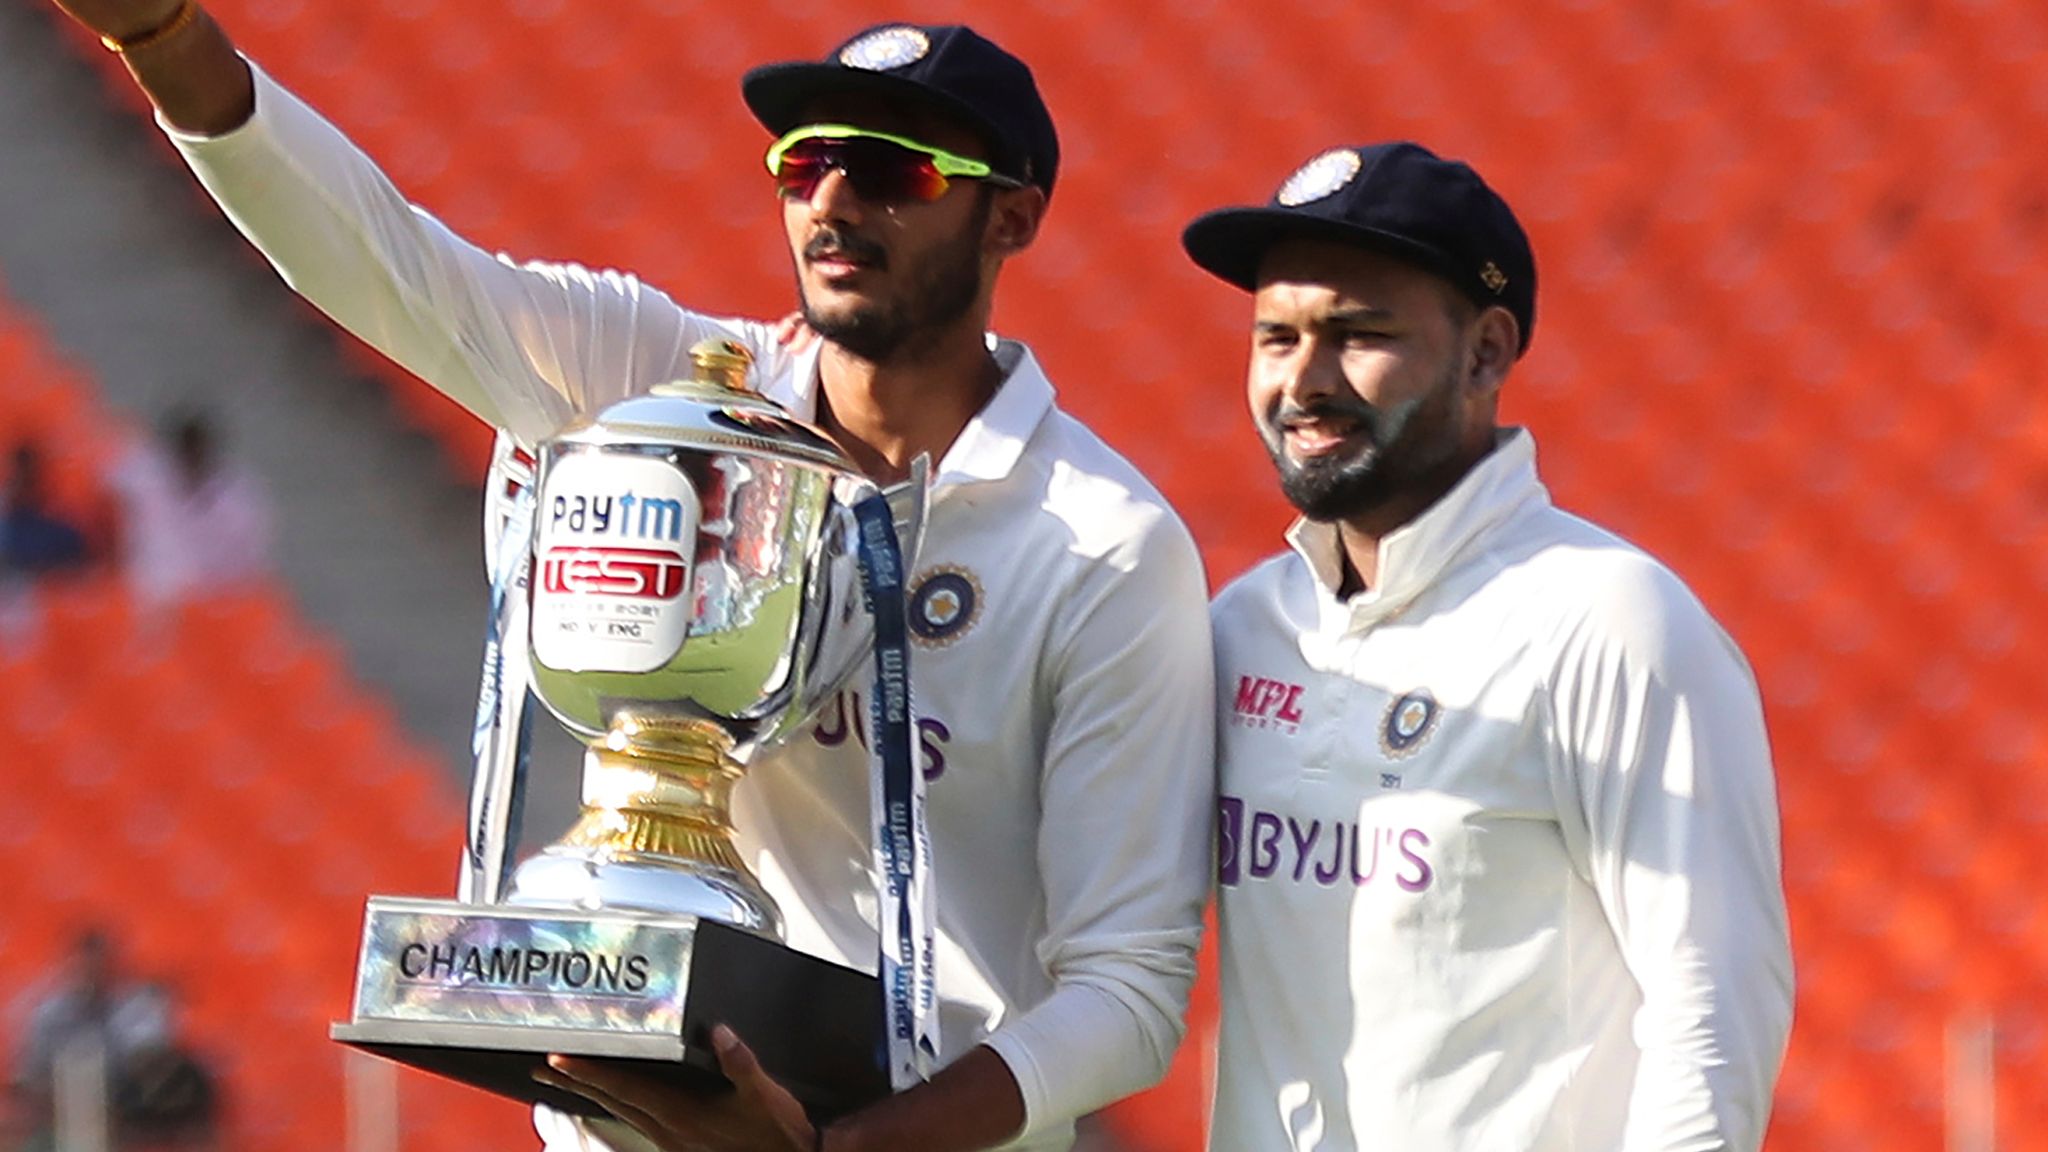 Pink Ball Test: Virat Kohli's stunning dismissal fired us up, says